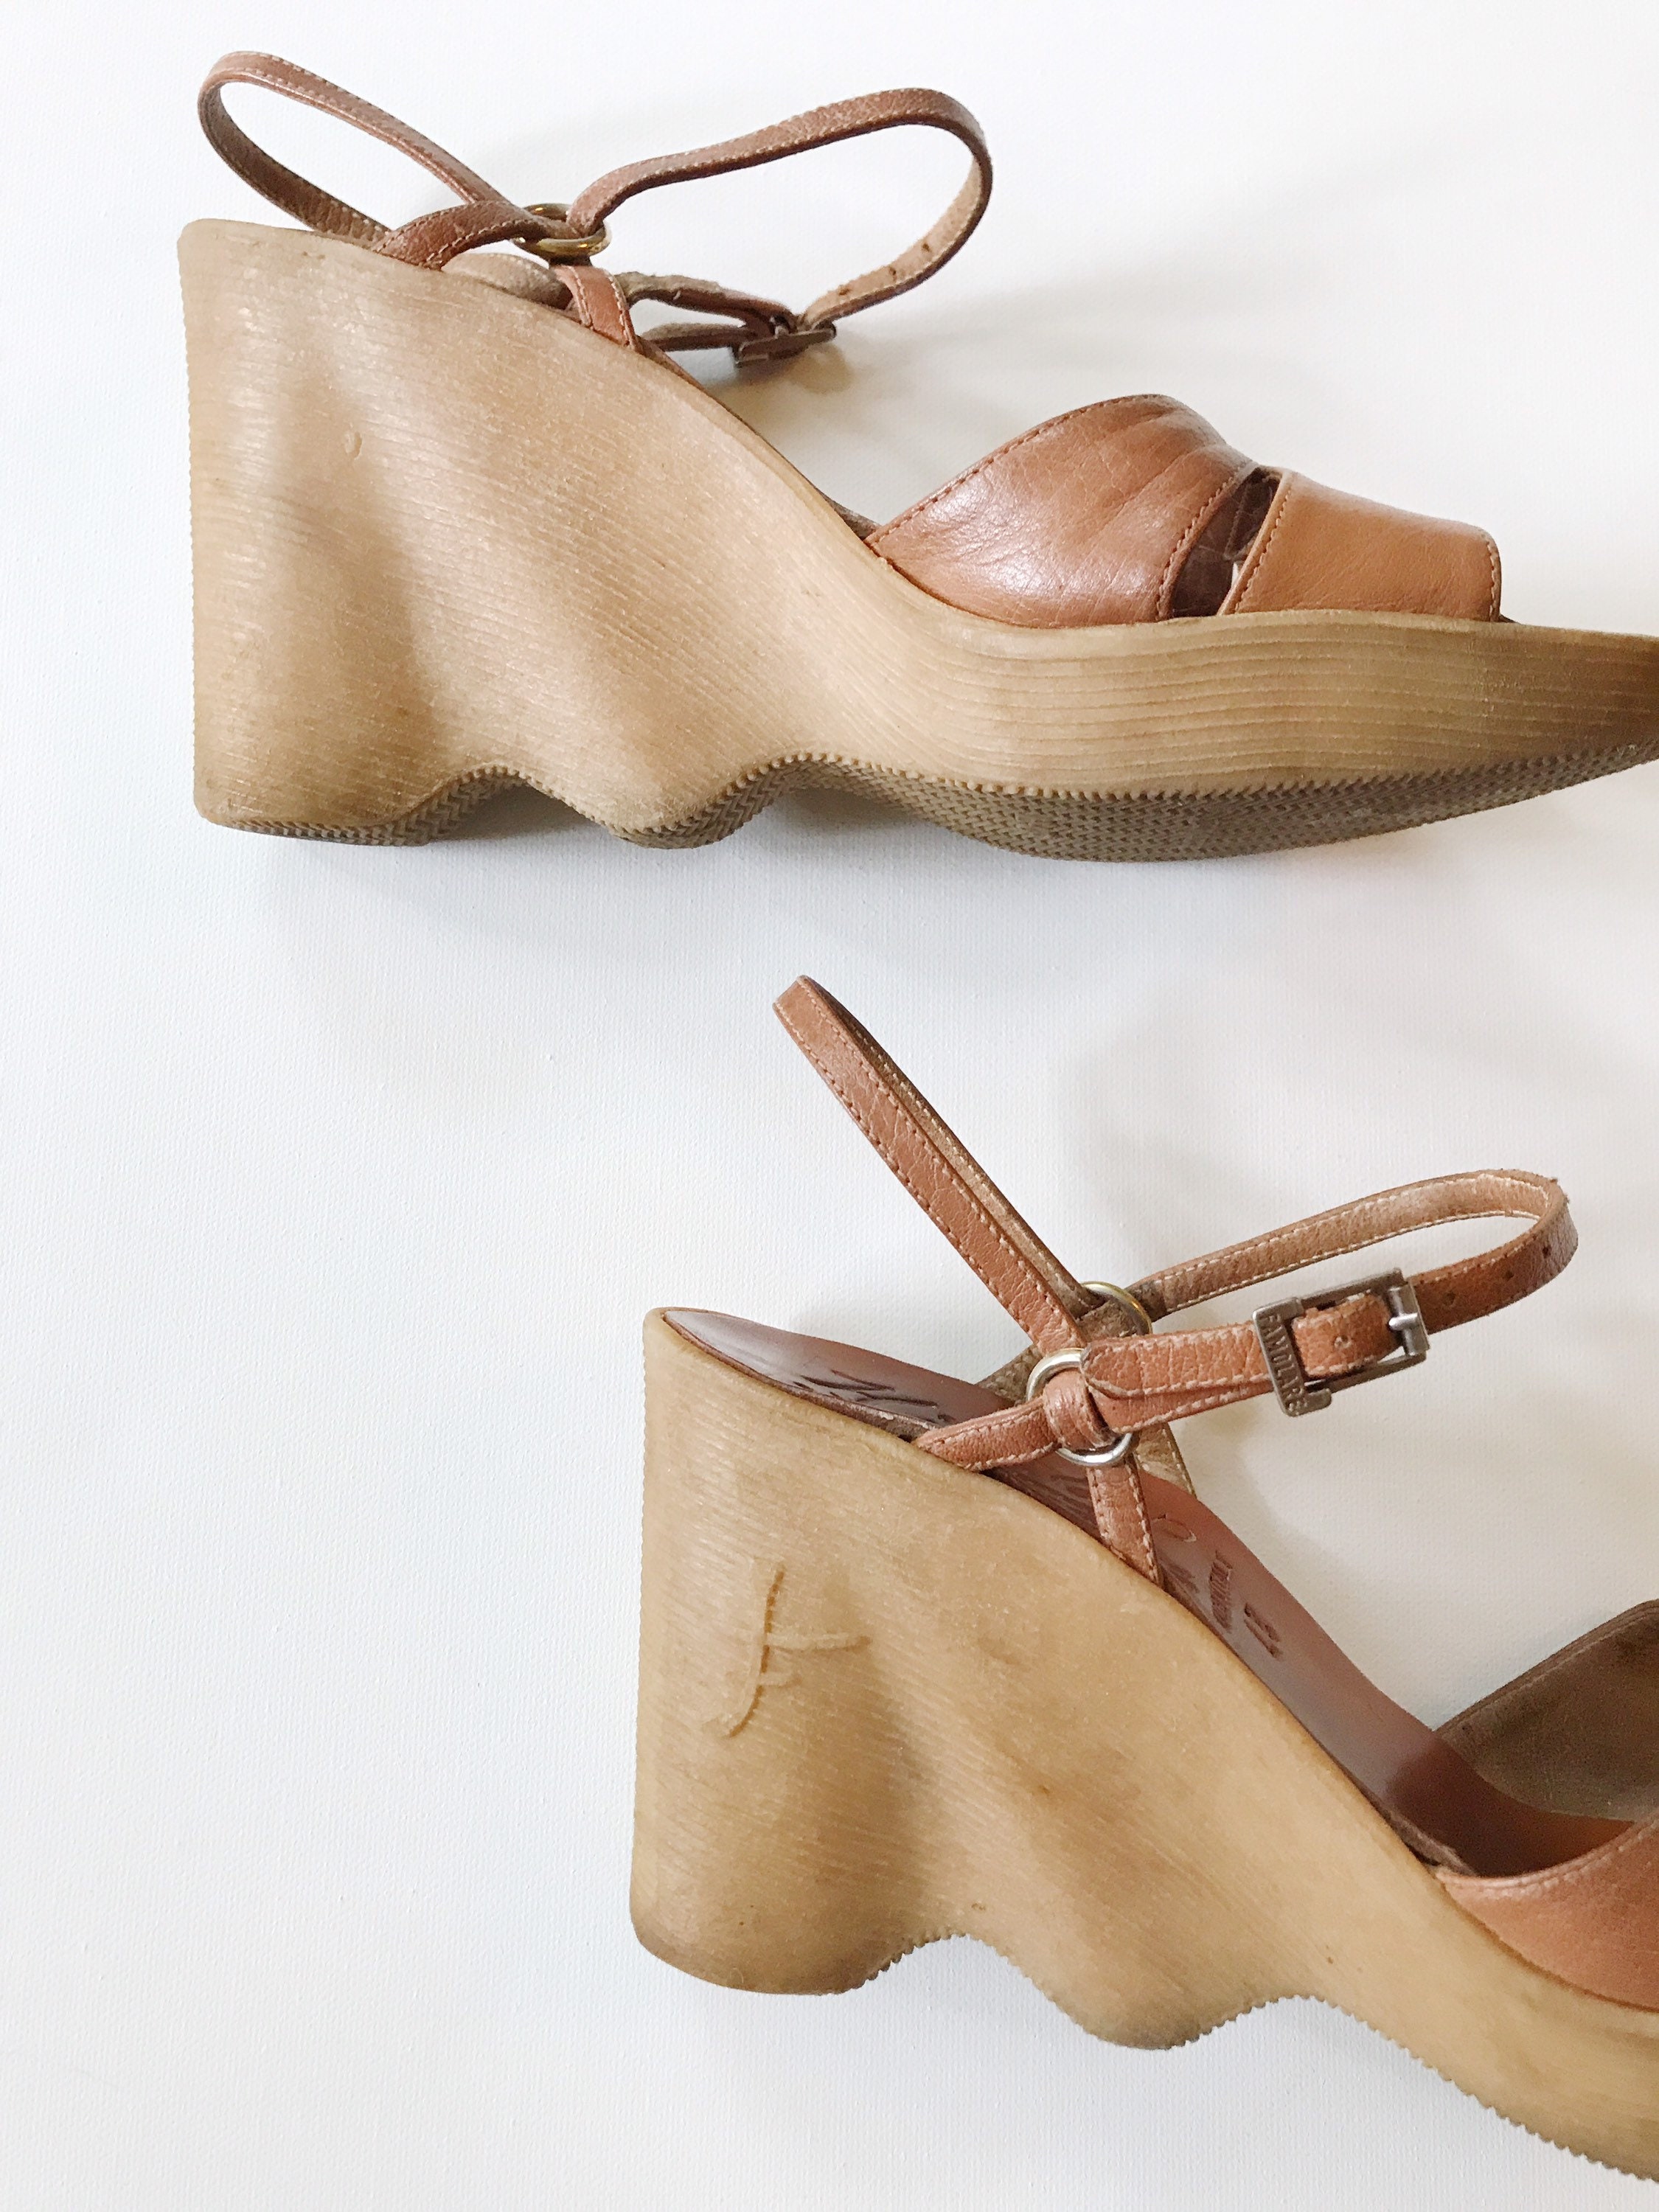 vintage Famolare shoes / 70s platform shoes / leather strap sandals